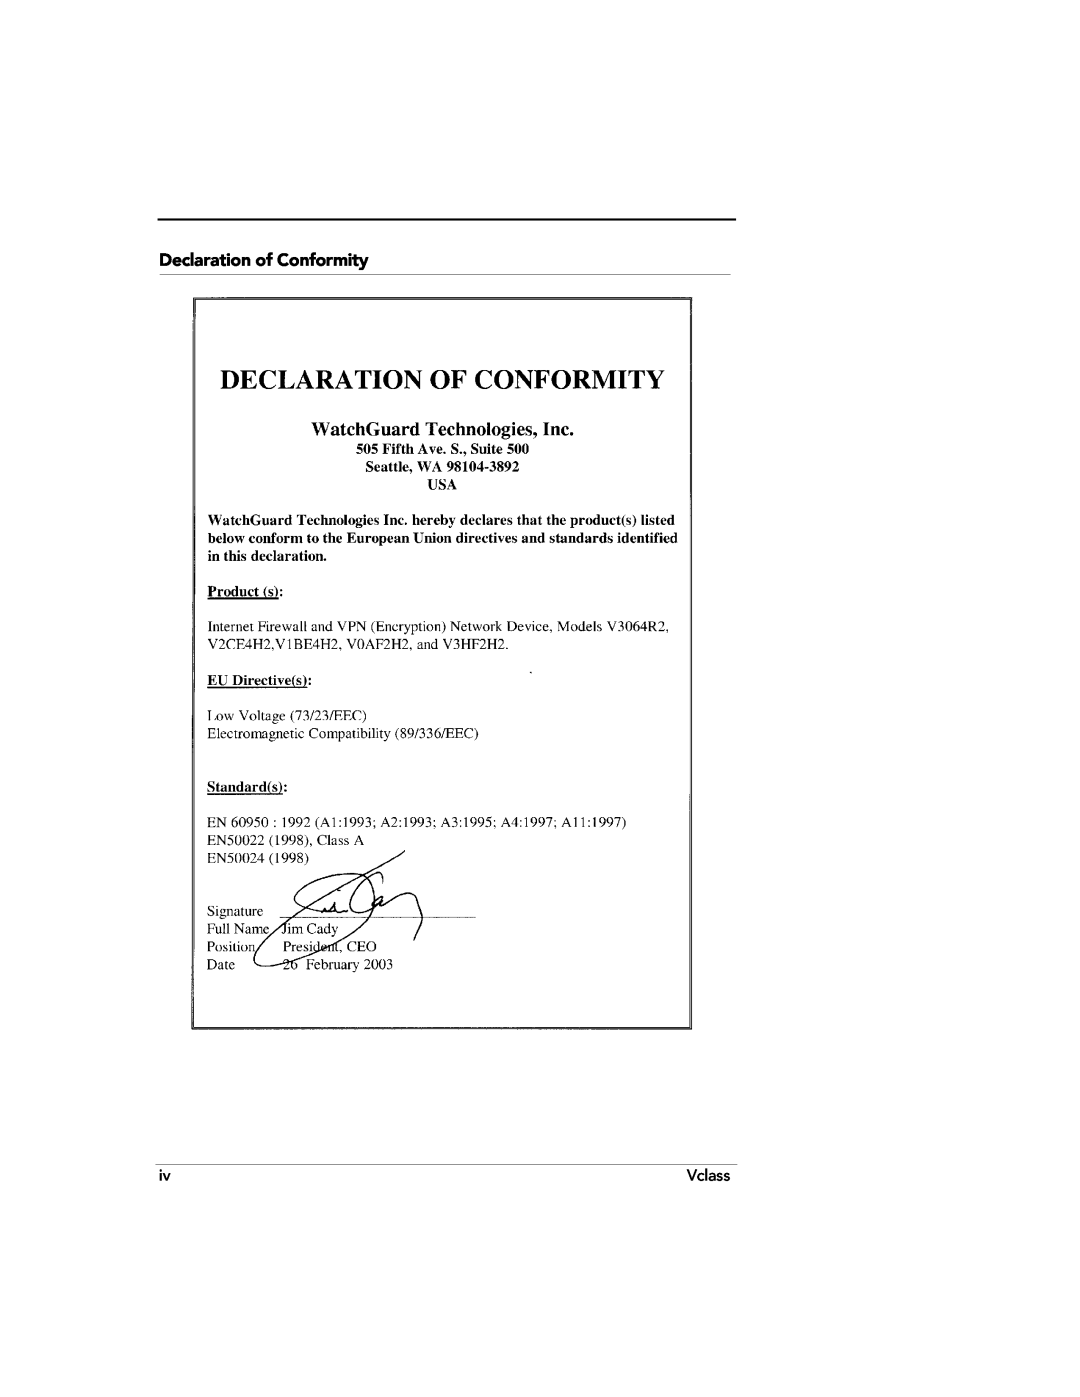 WatchGuard Technologies V80, V60L, V100 manual Declaration of Conformity, Vclass 